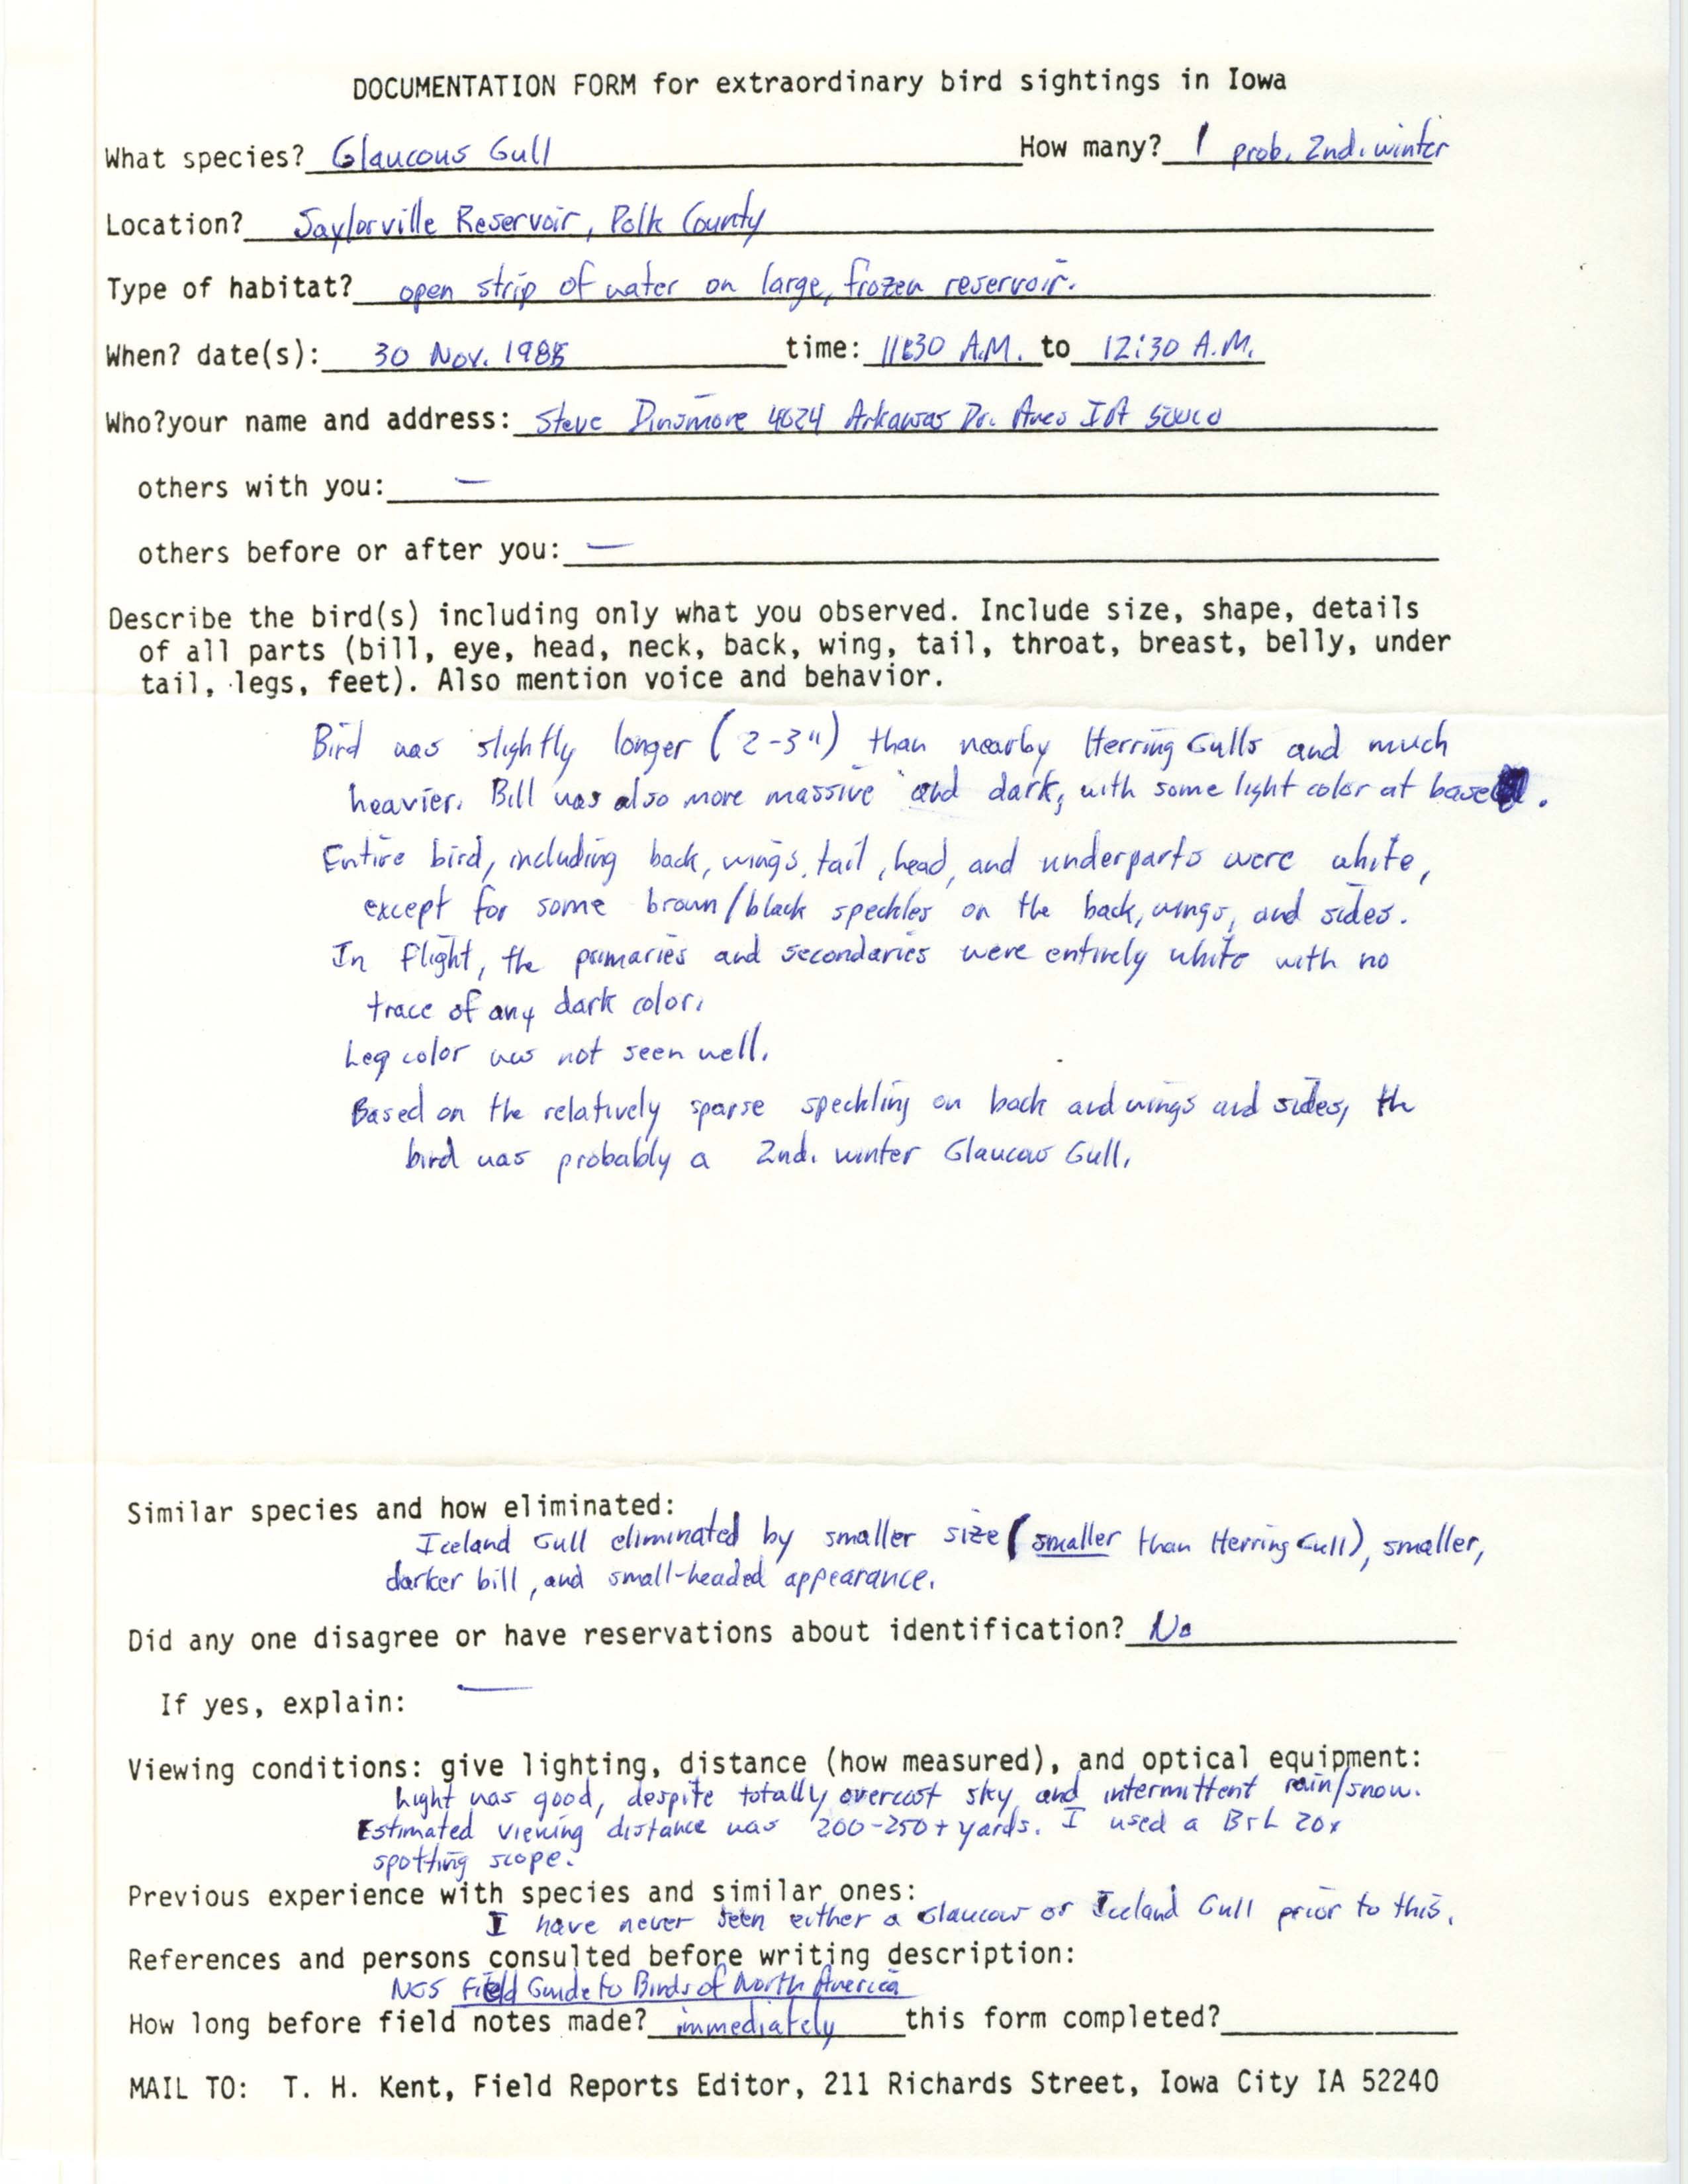 Rare bird documentation form for Glaucous Gull at Saylorville Reservoir, 1988